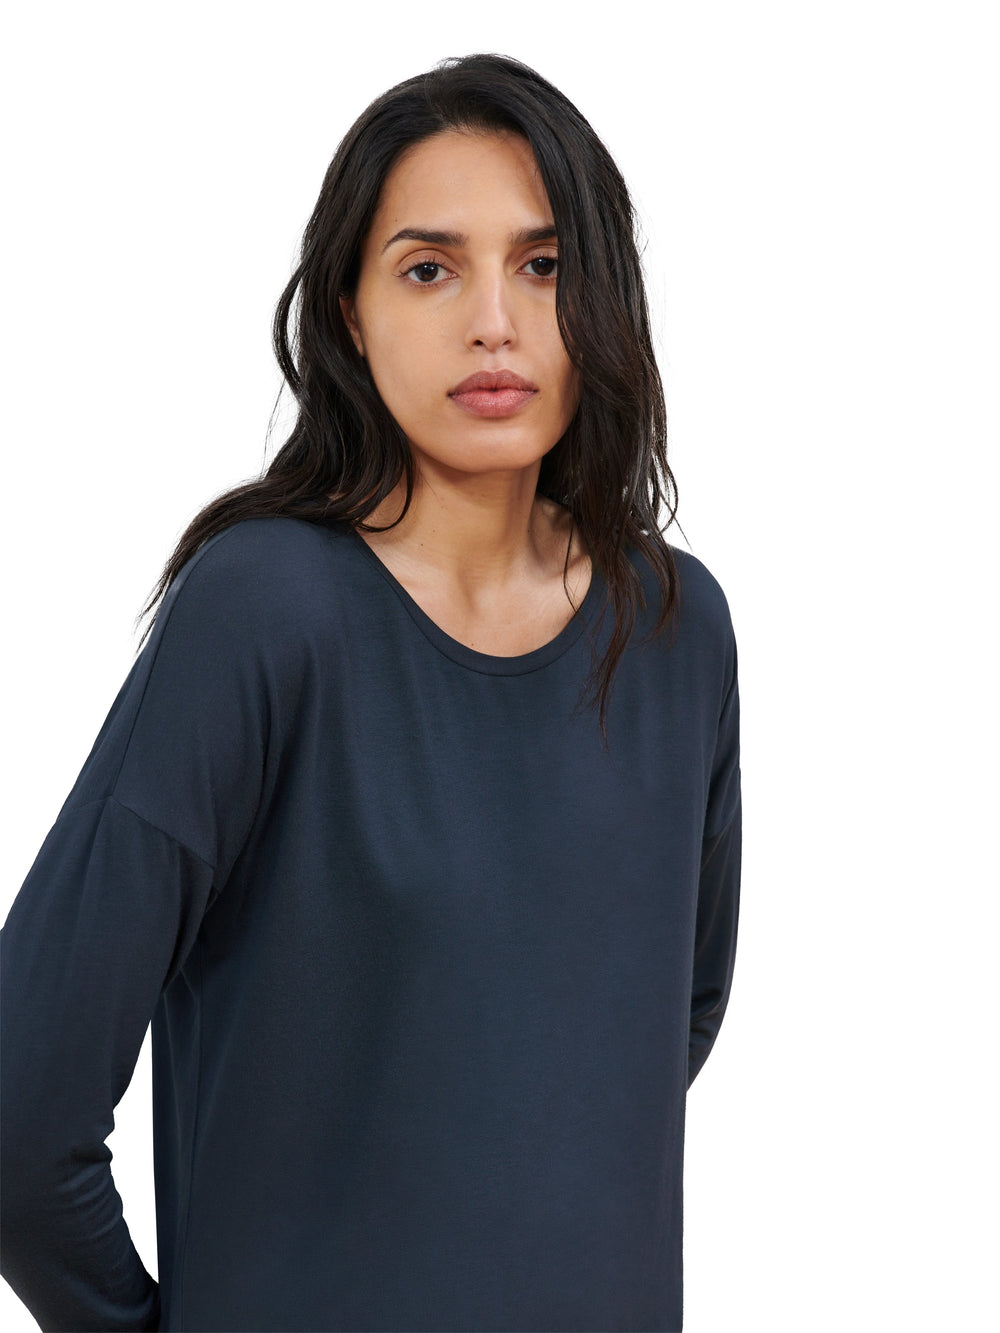 Femilet - Yara T-Shirt Ls Navy Dark Blue Pyjama Top Femilet 